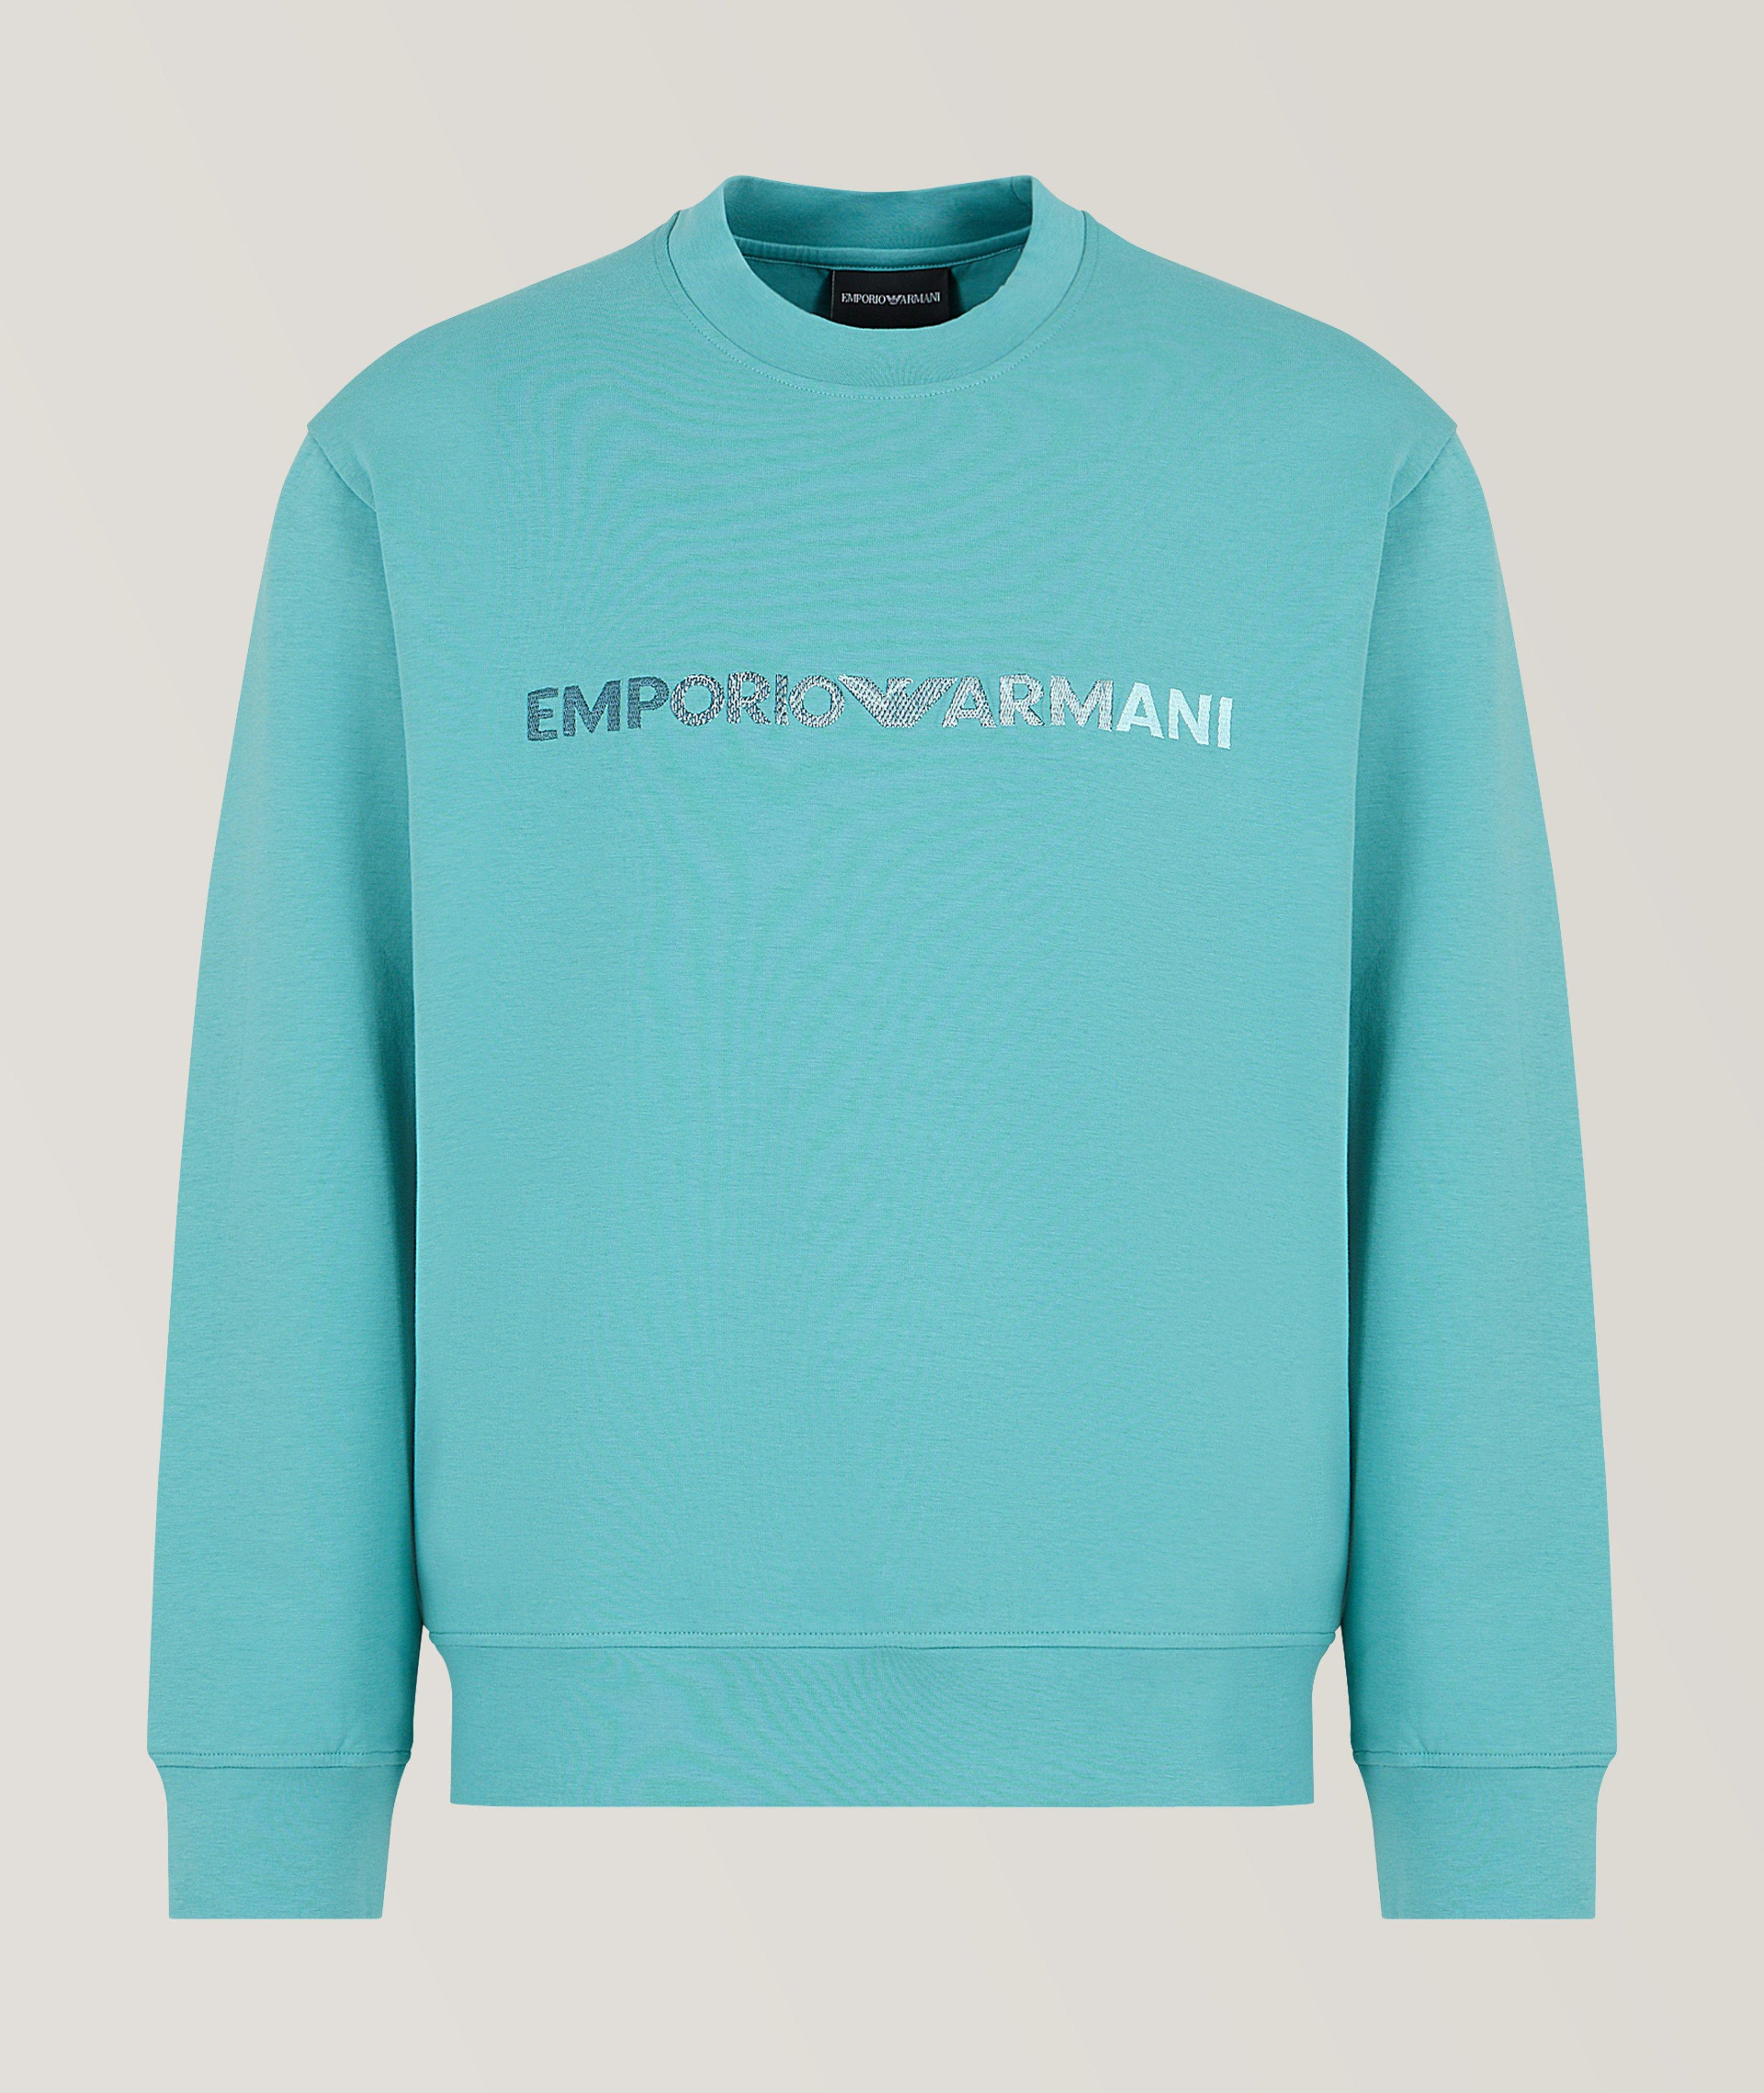 Double-Jersey Embroidered Sweatshirt image 0